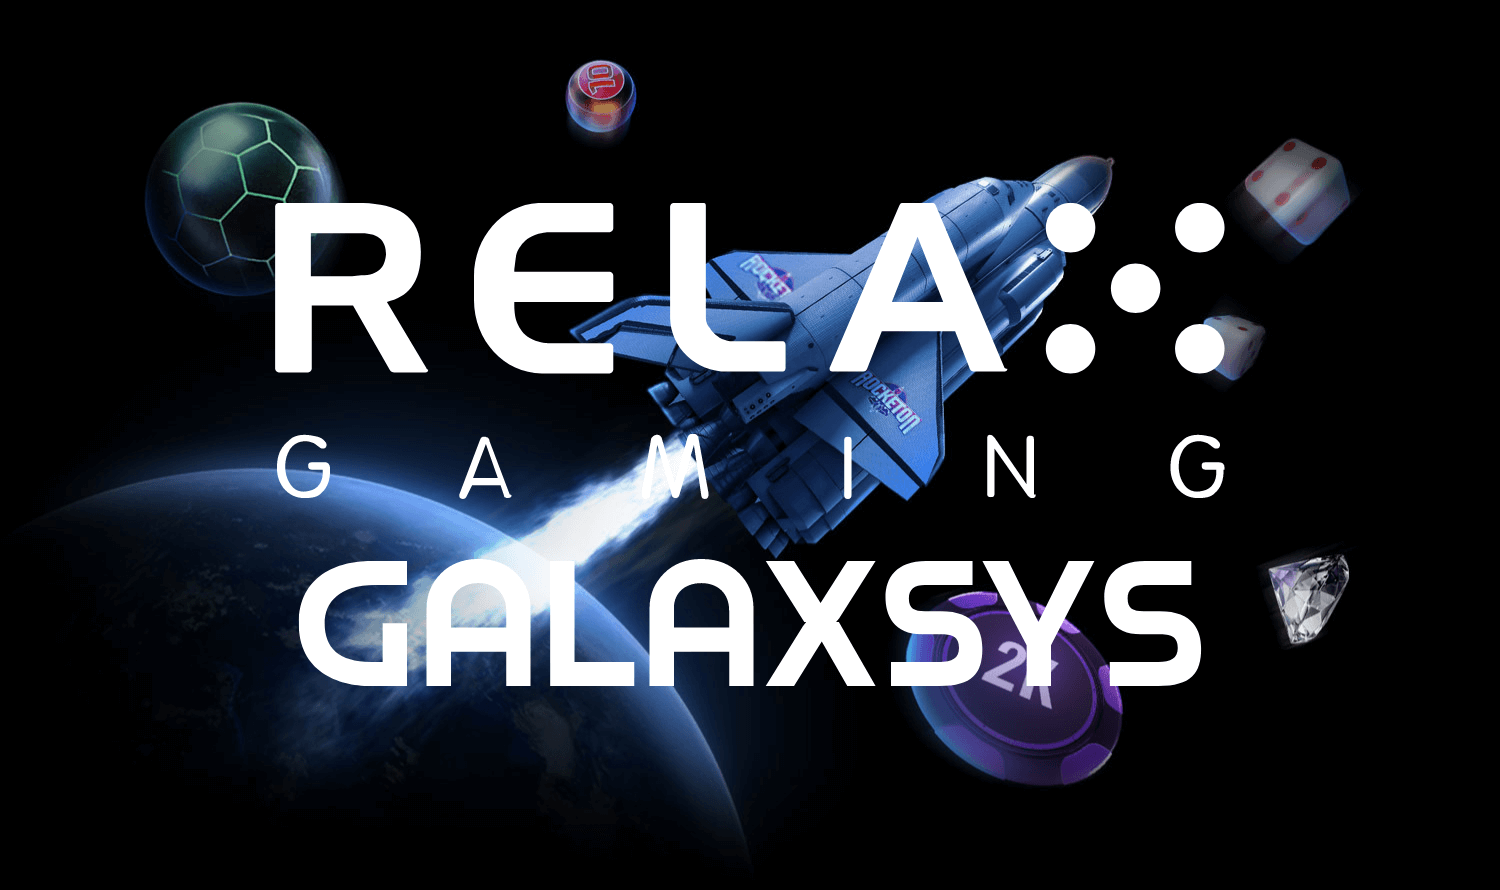 Galaxsys เซ็นสัญญาผลิตเกมคาสิโนออนไลน์ให้แก่ Relax Gaming